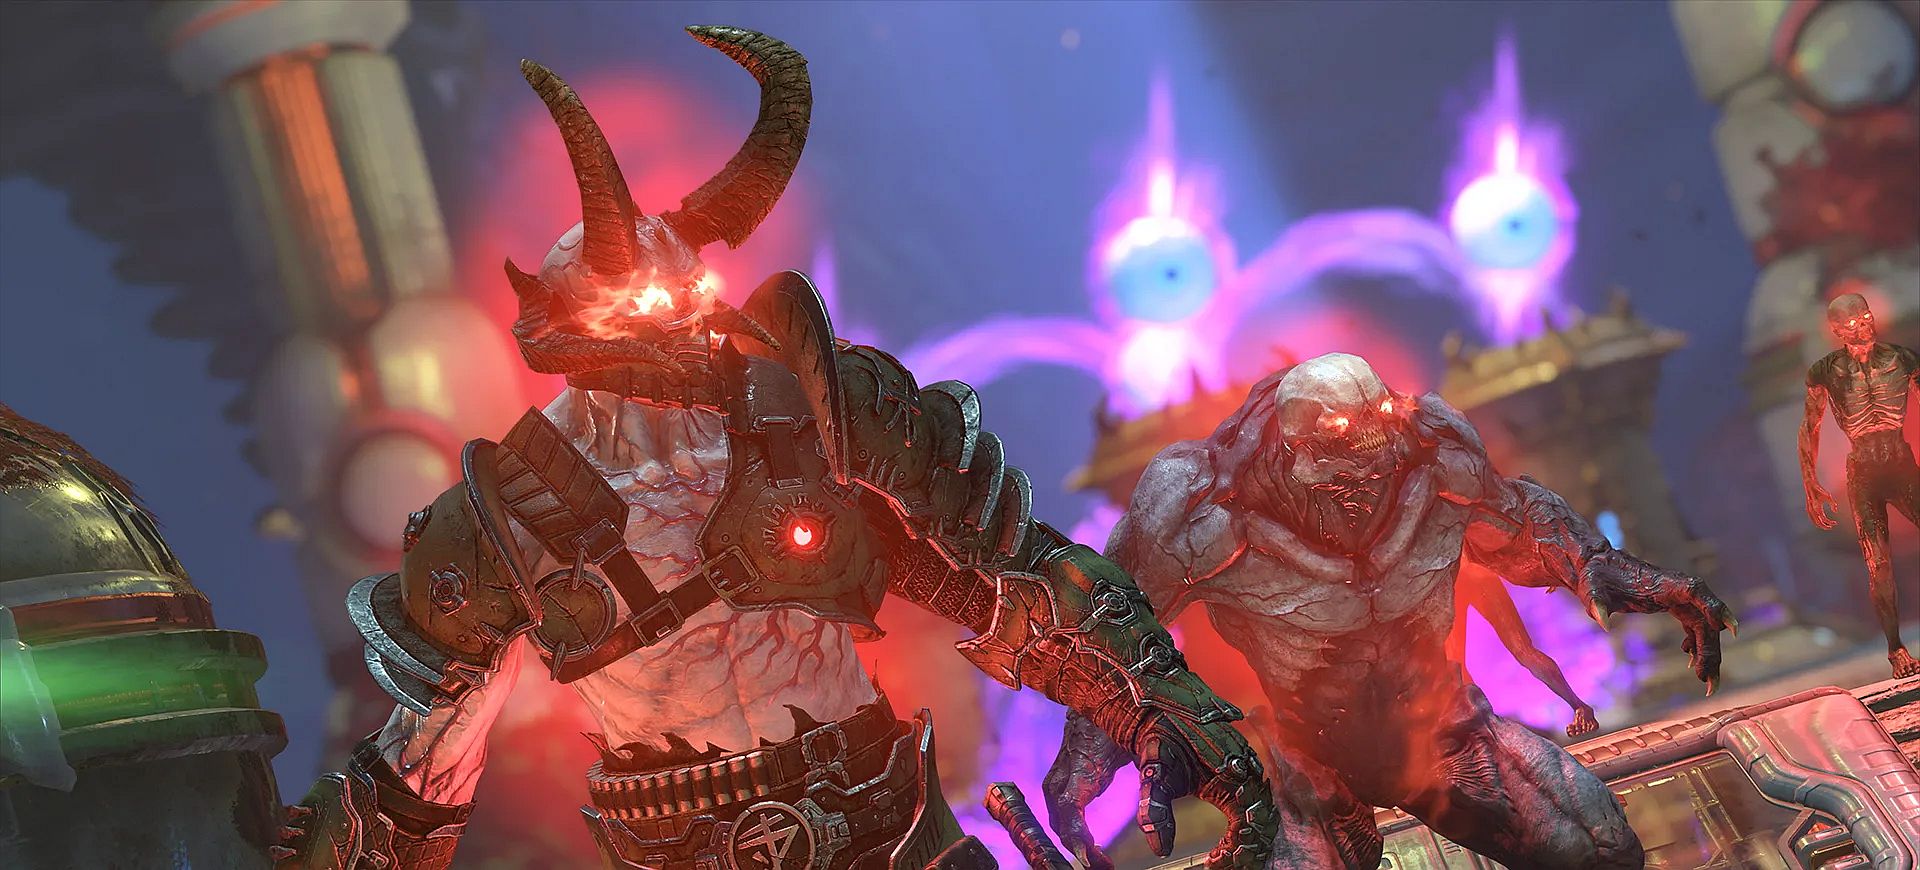 Image for Horde Mode comes to Doom Eternal next week alongside 6.66 update